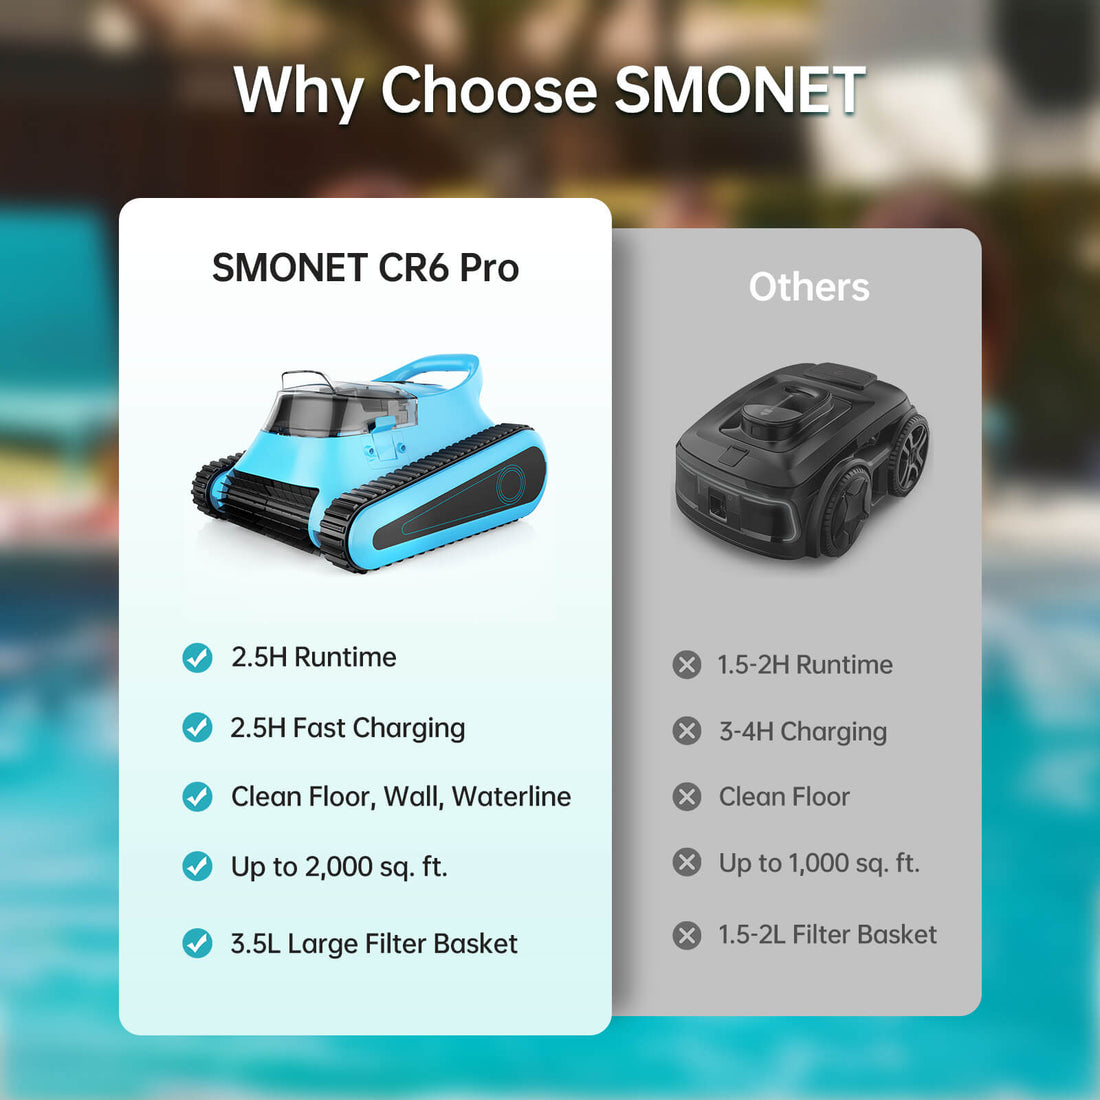 Smonet CR6 Pro cordless pool robotic